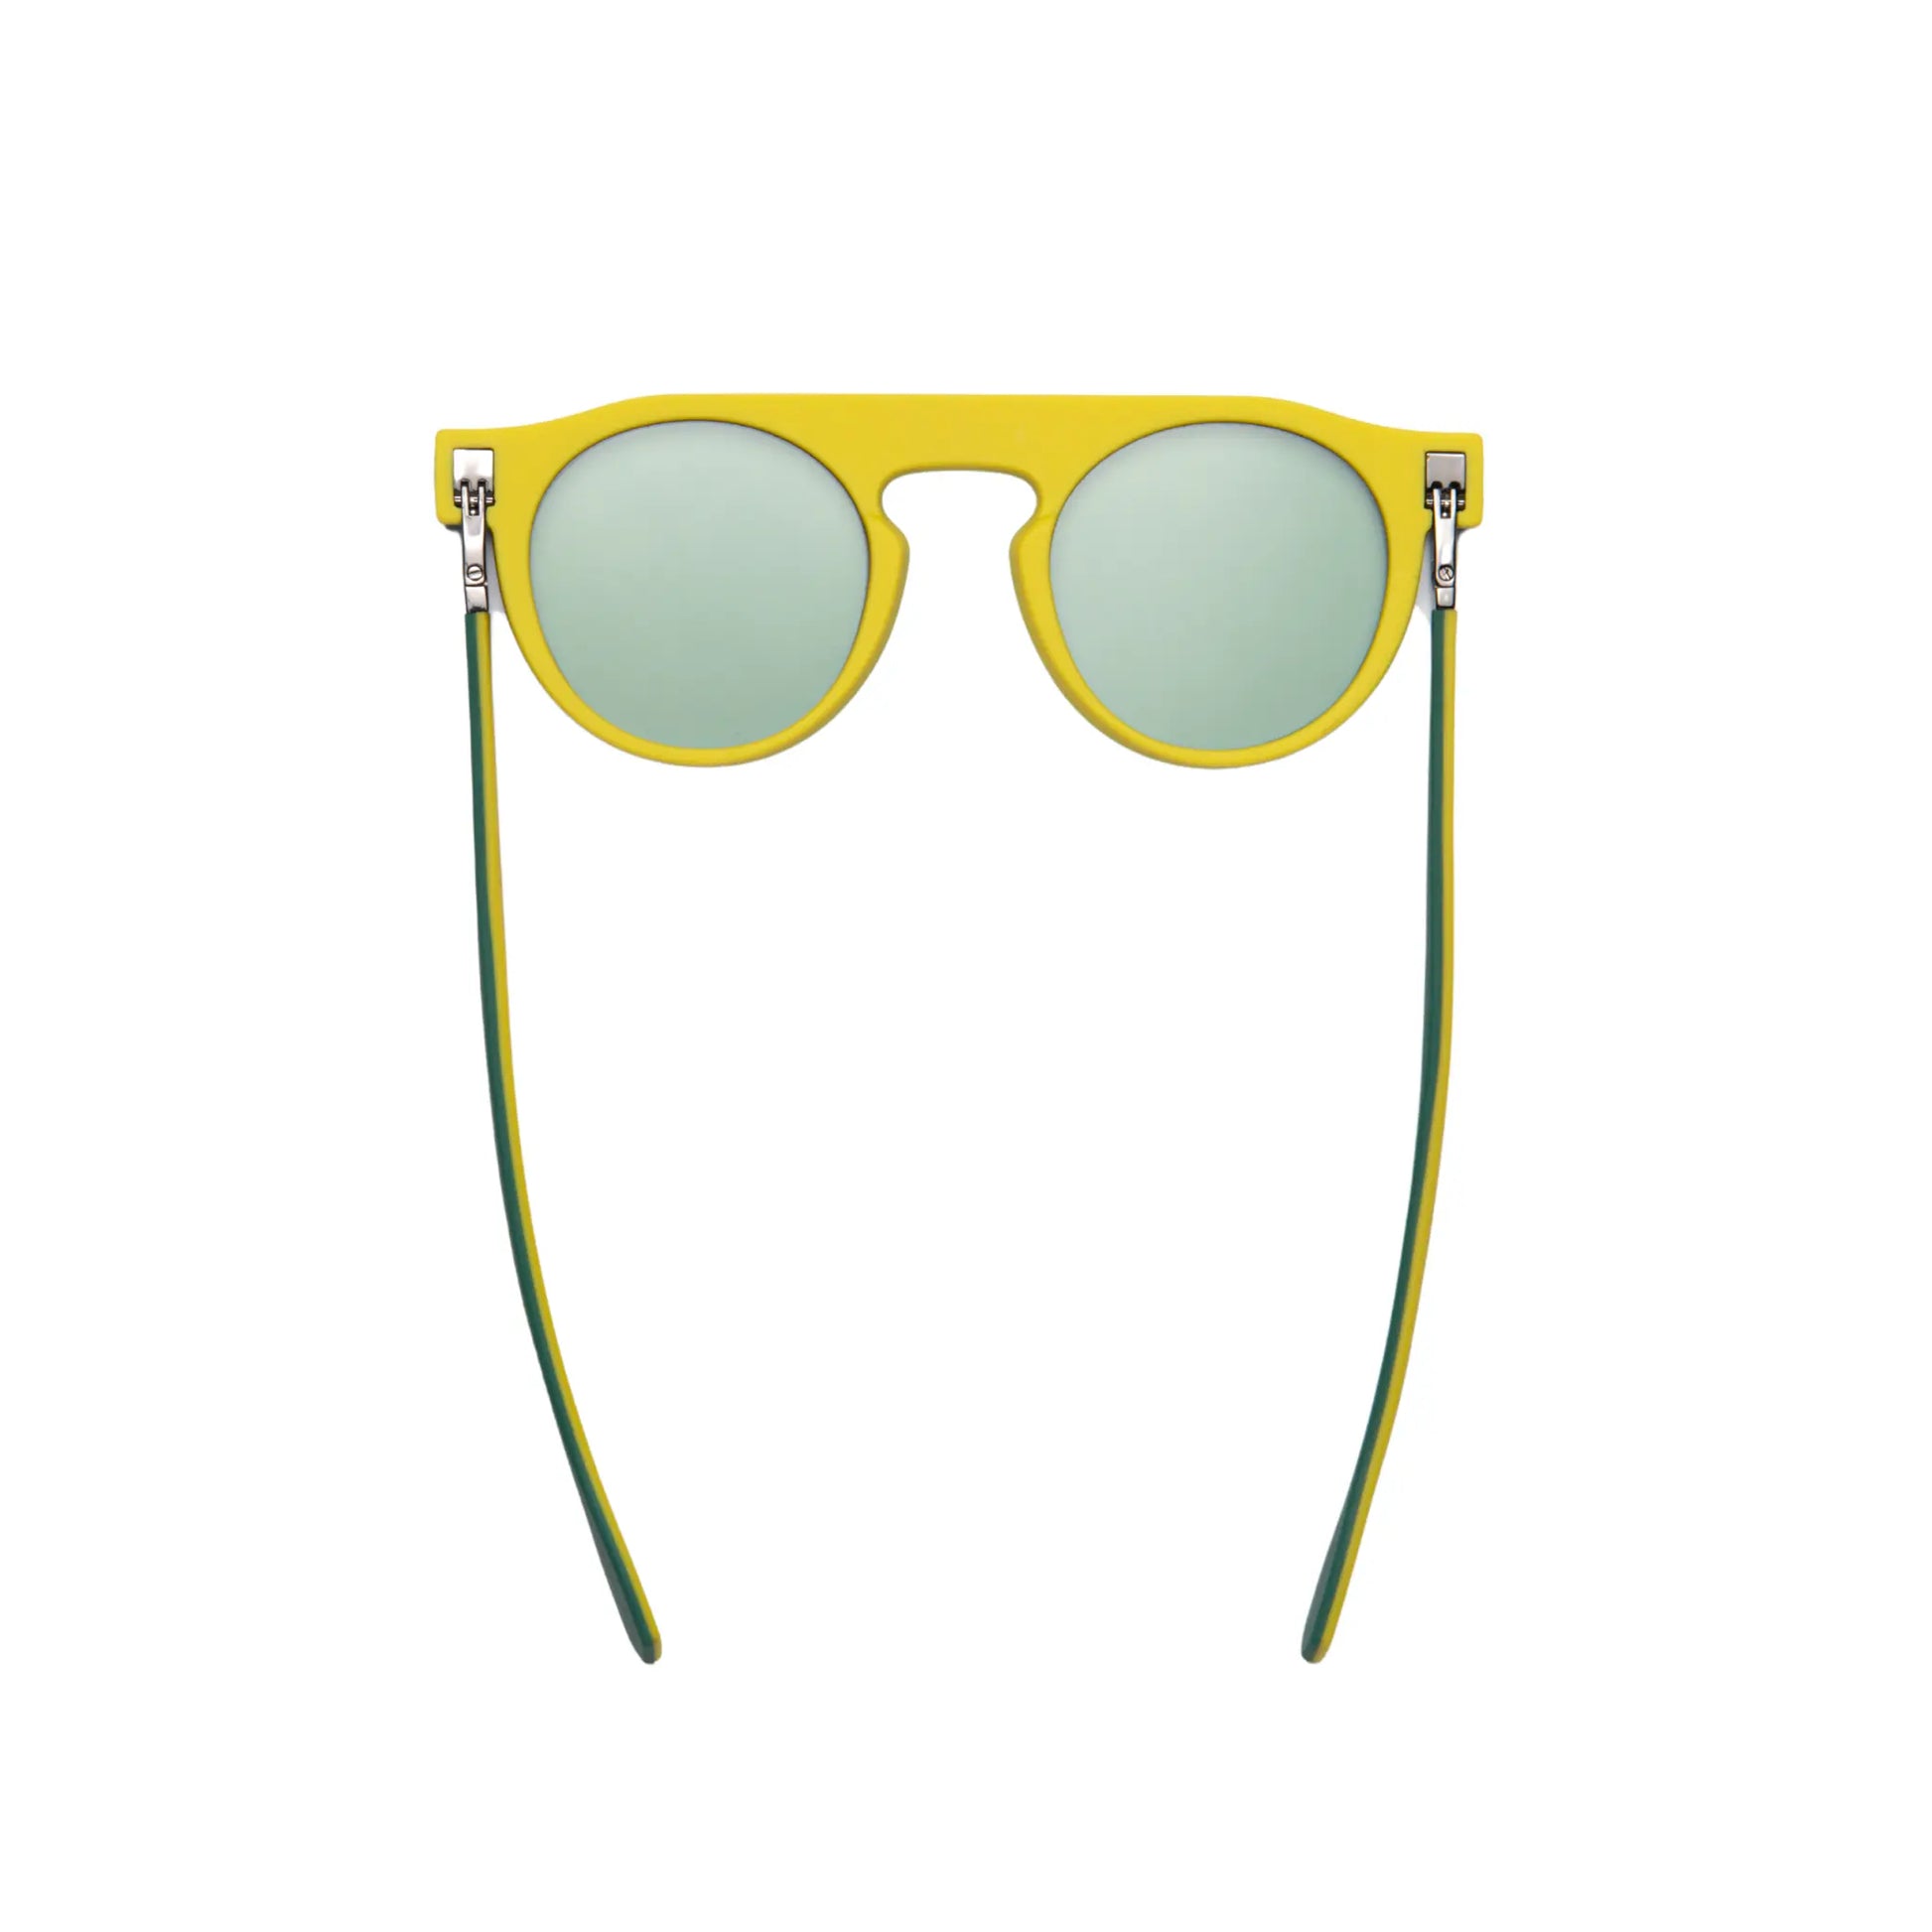 Reverso sunglasses green & yellow reversible & ultra light top view